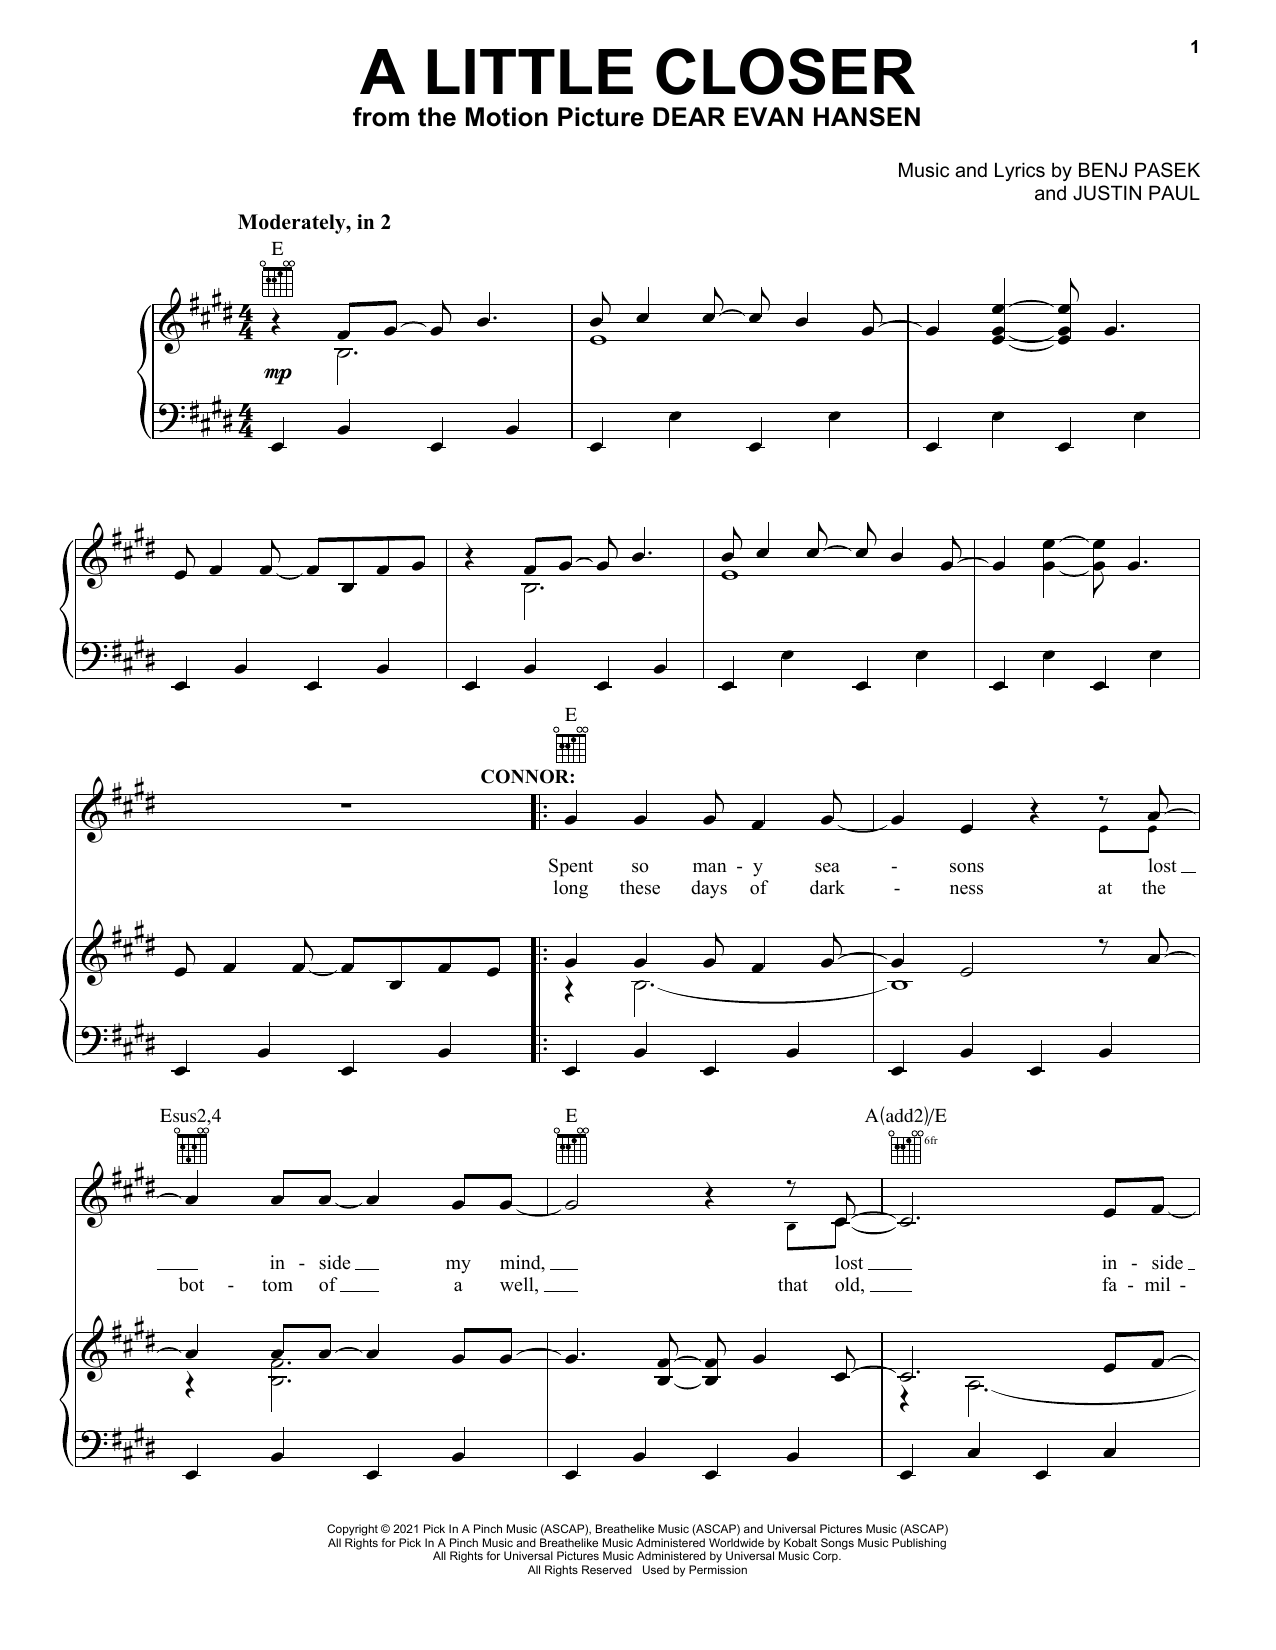 Pasek & Paul A Little Closer (from Dear Evan Hansen) Sheet Music Notes & Chords for Guitar Tab - Download or Print PDF